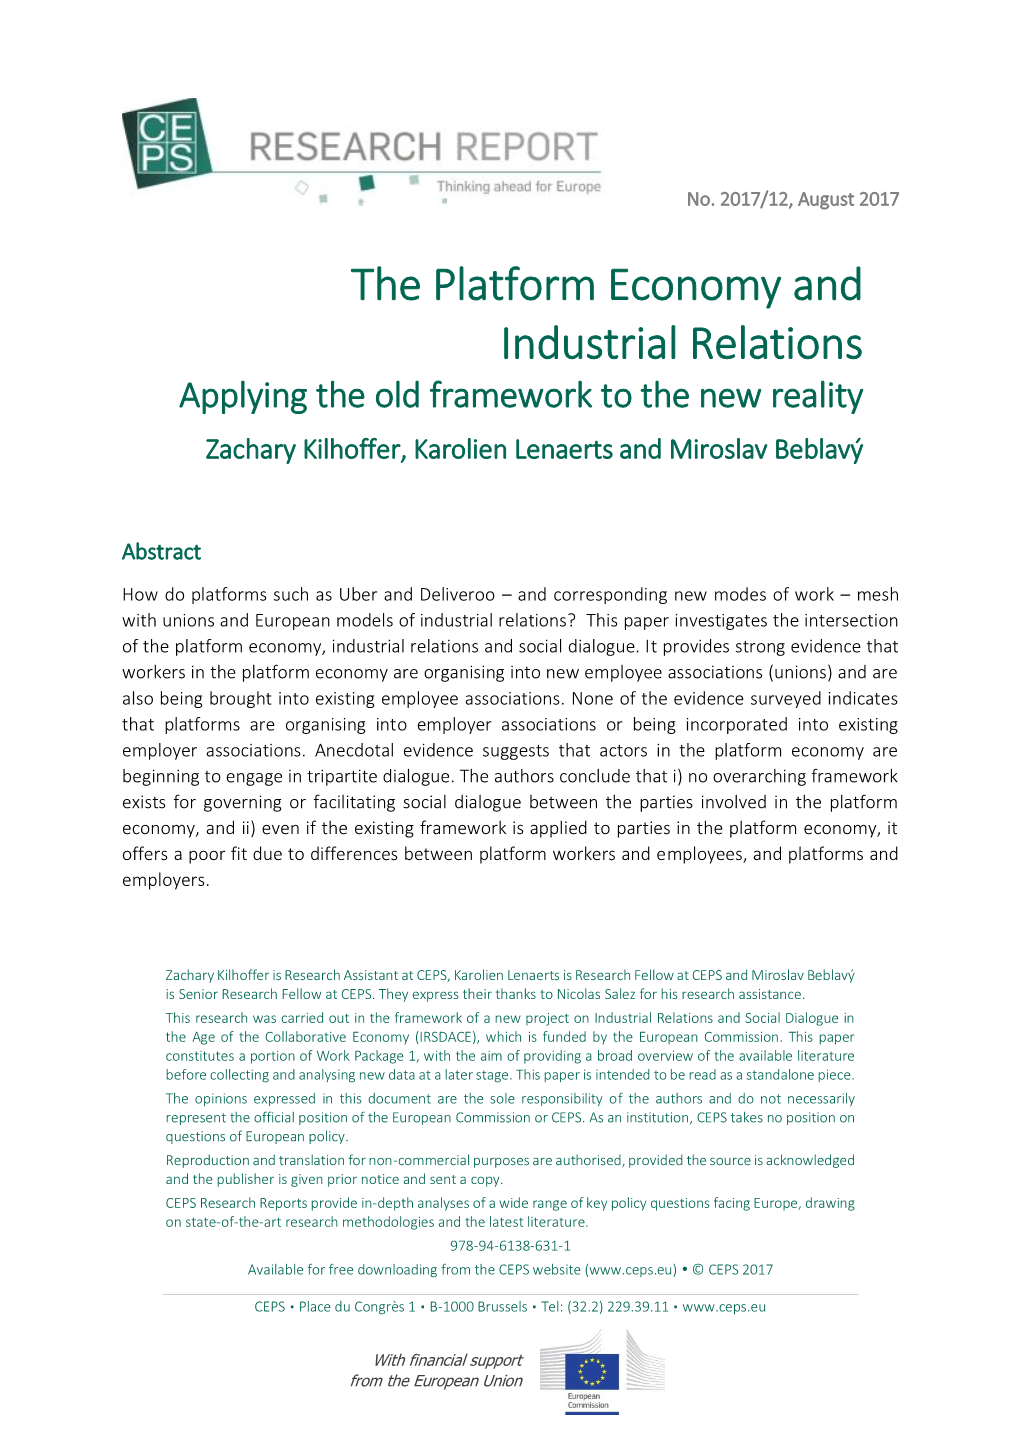 The Platform Economy and Industrial Relations Applying the Old Framework to the New Reality Zachary Kilhoffer, Karolien Lenaerts and Miroslav Beblavý